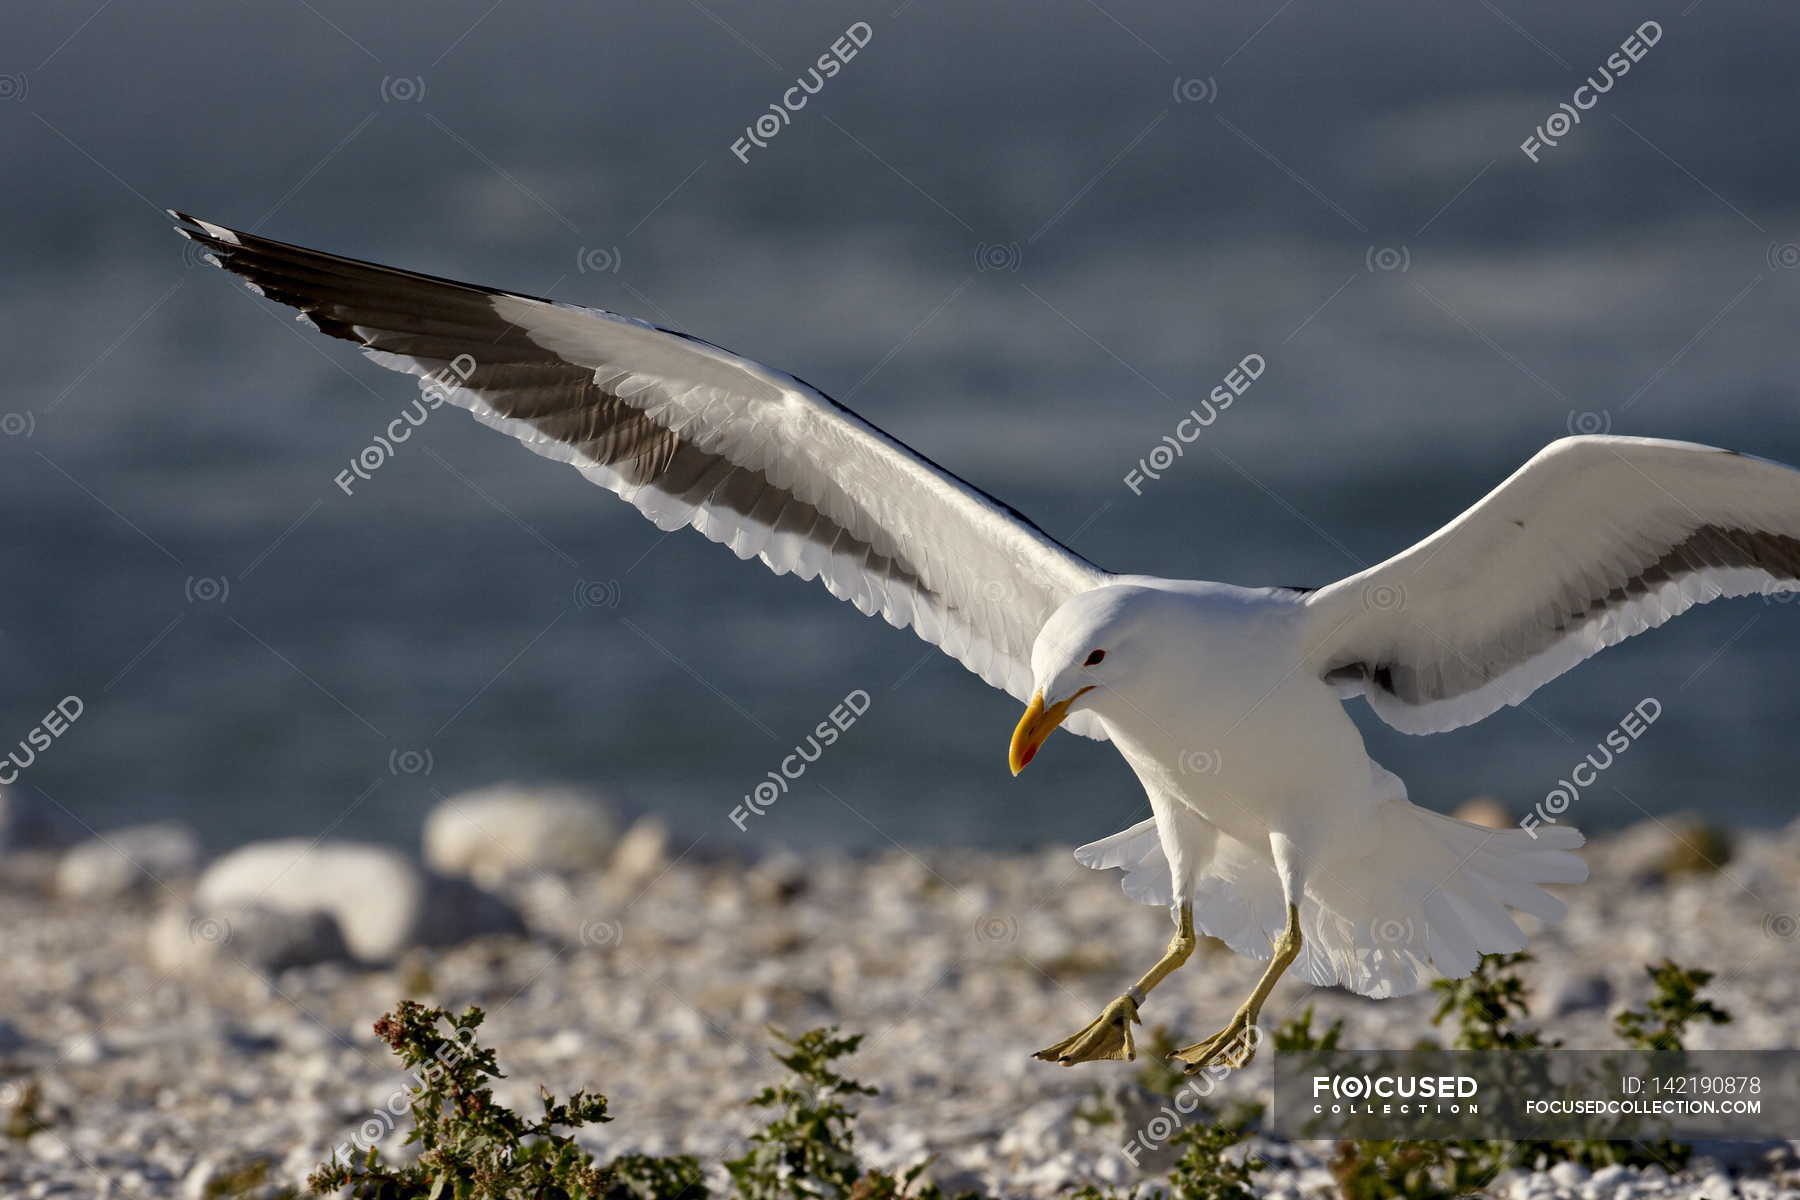 Cape gull landing — Stock Photo | #142190878